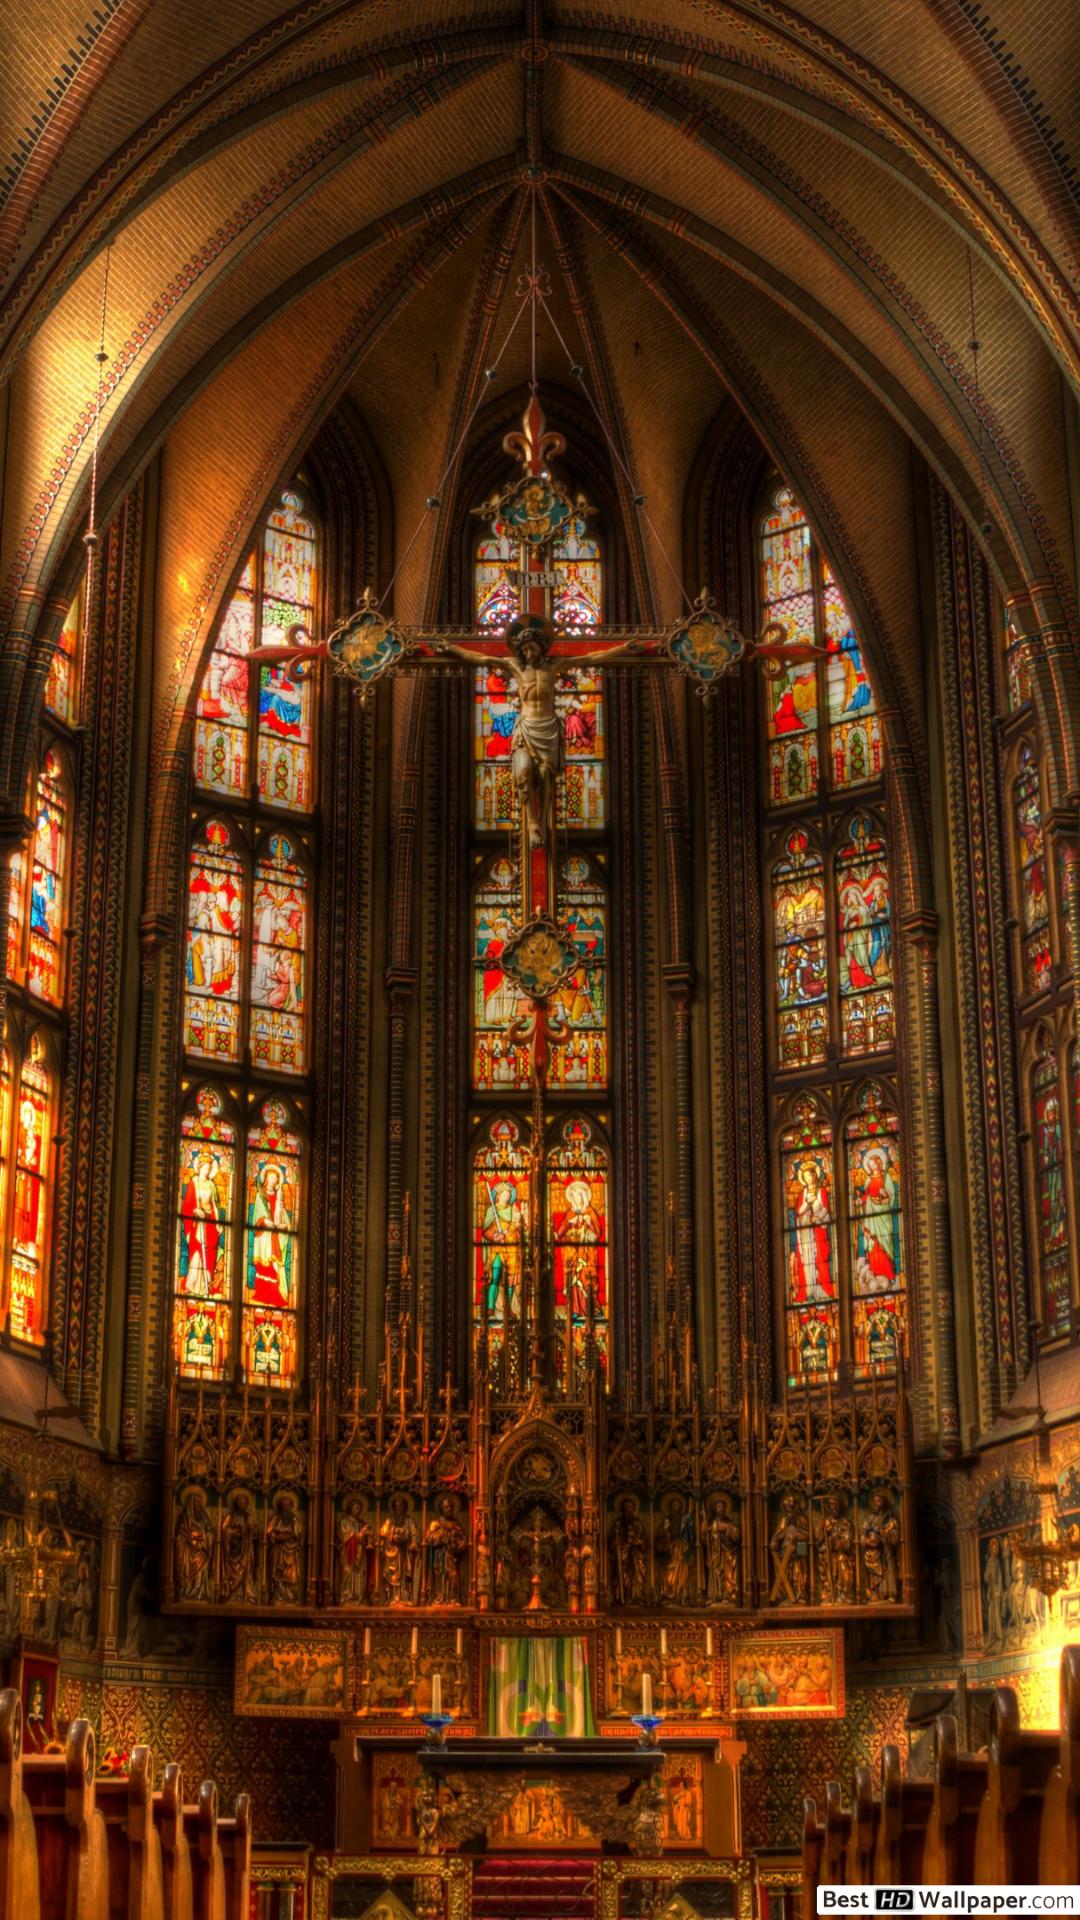 Inside st. joseph's cathedral in groningen HD wallpaper download